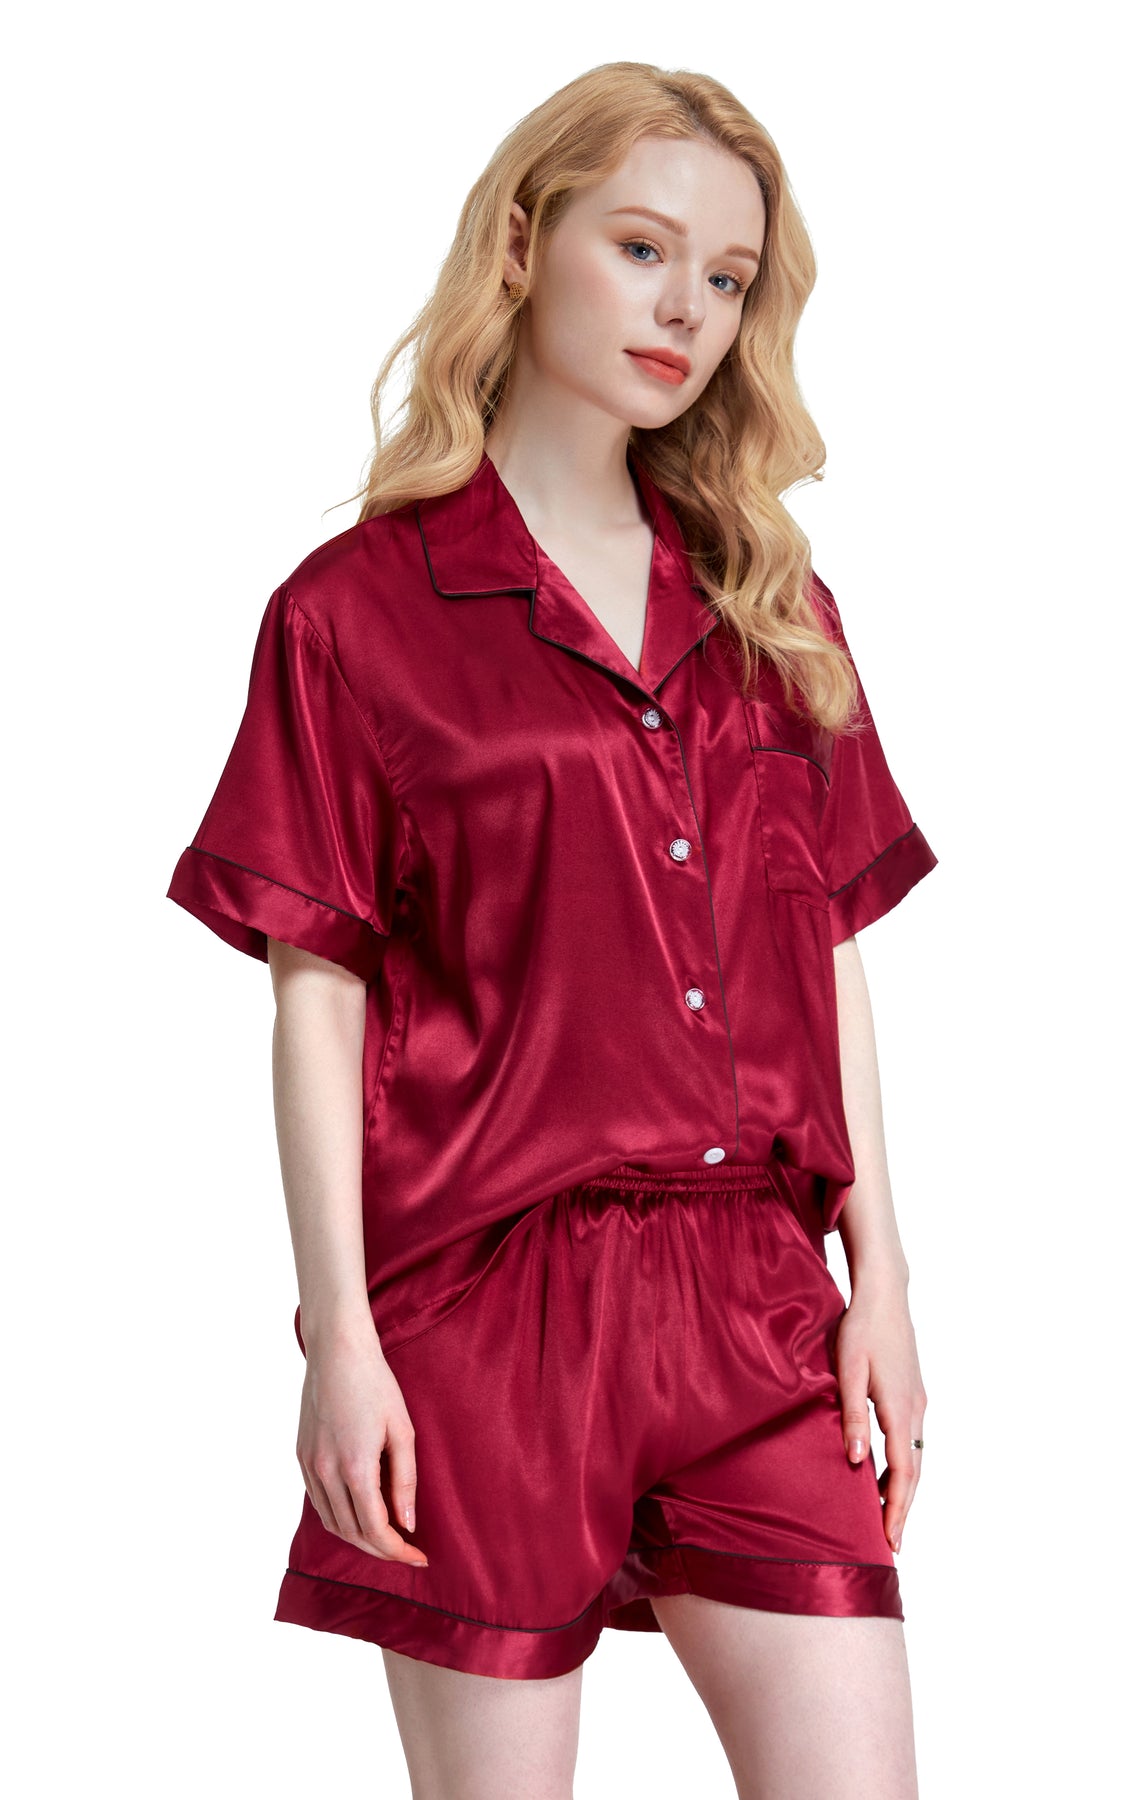 Women S Silk Satin Pajama Set Short Sleeve Burgundy With Black Piping Tony And Candice